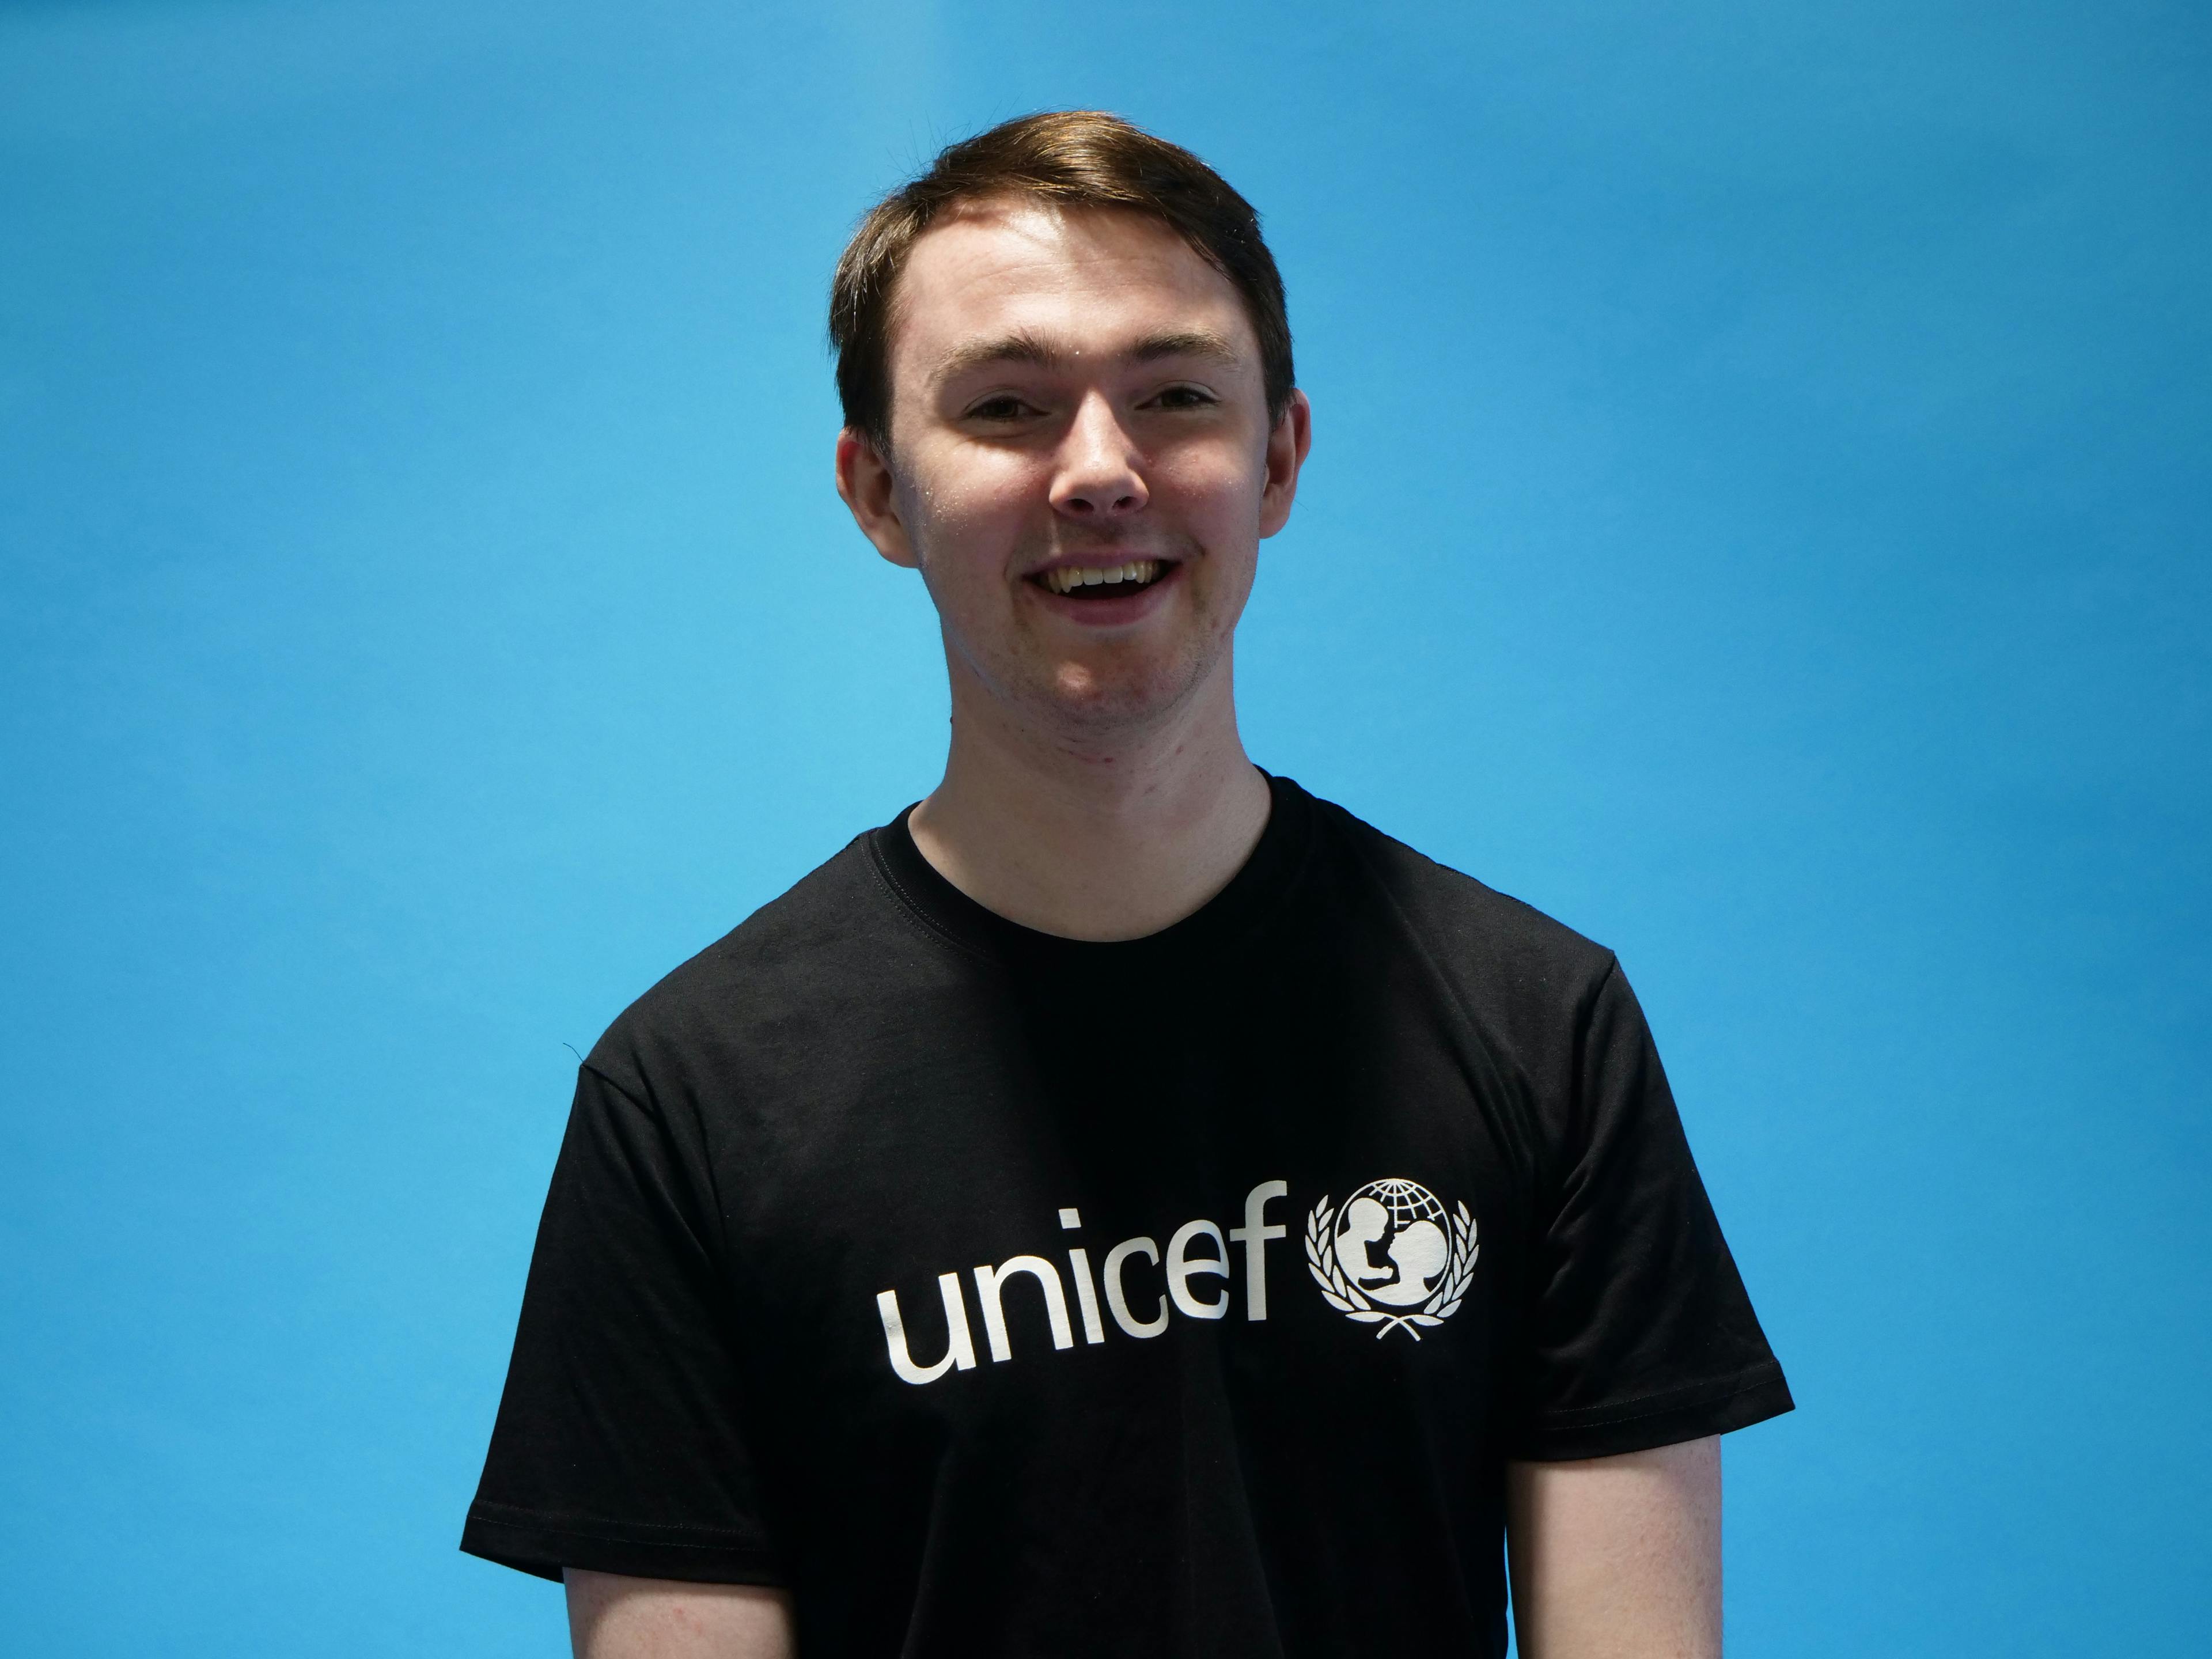 UNICEF Aotearoa Young Ambassador, Finley Duncan